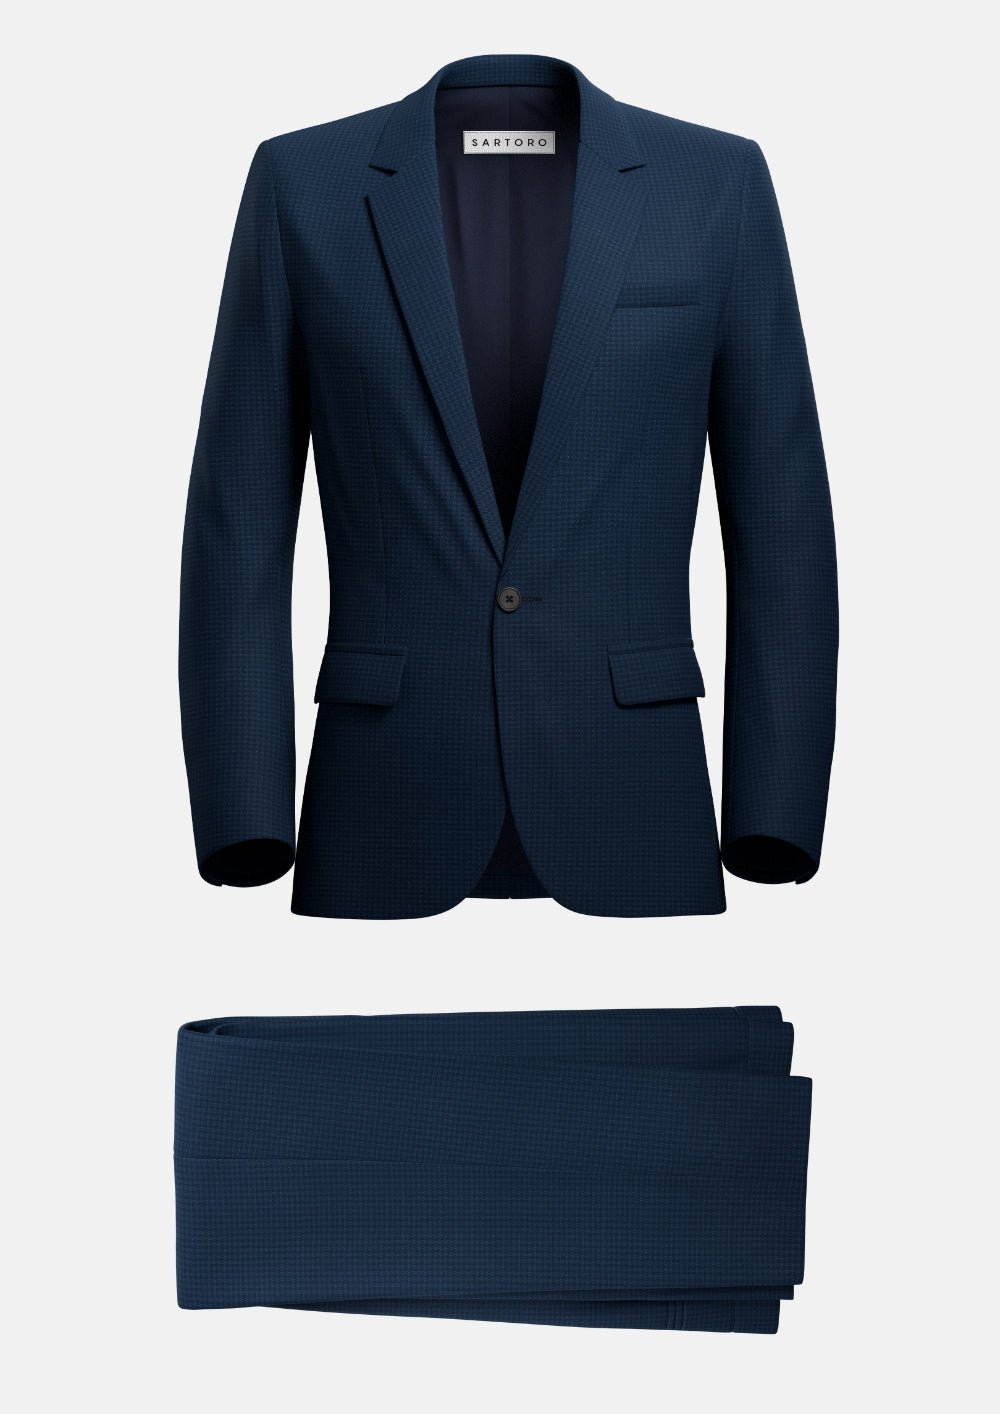 Lafayette Blue Microcheck Suit - SARTORO